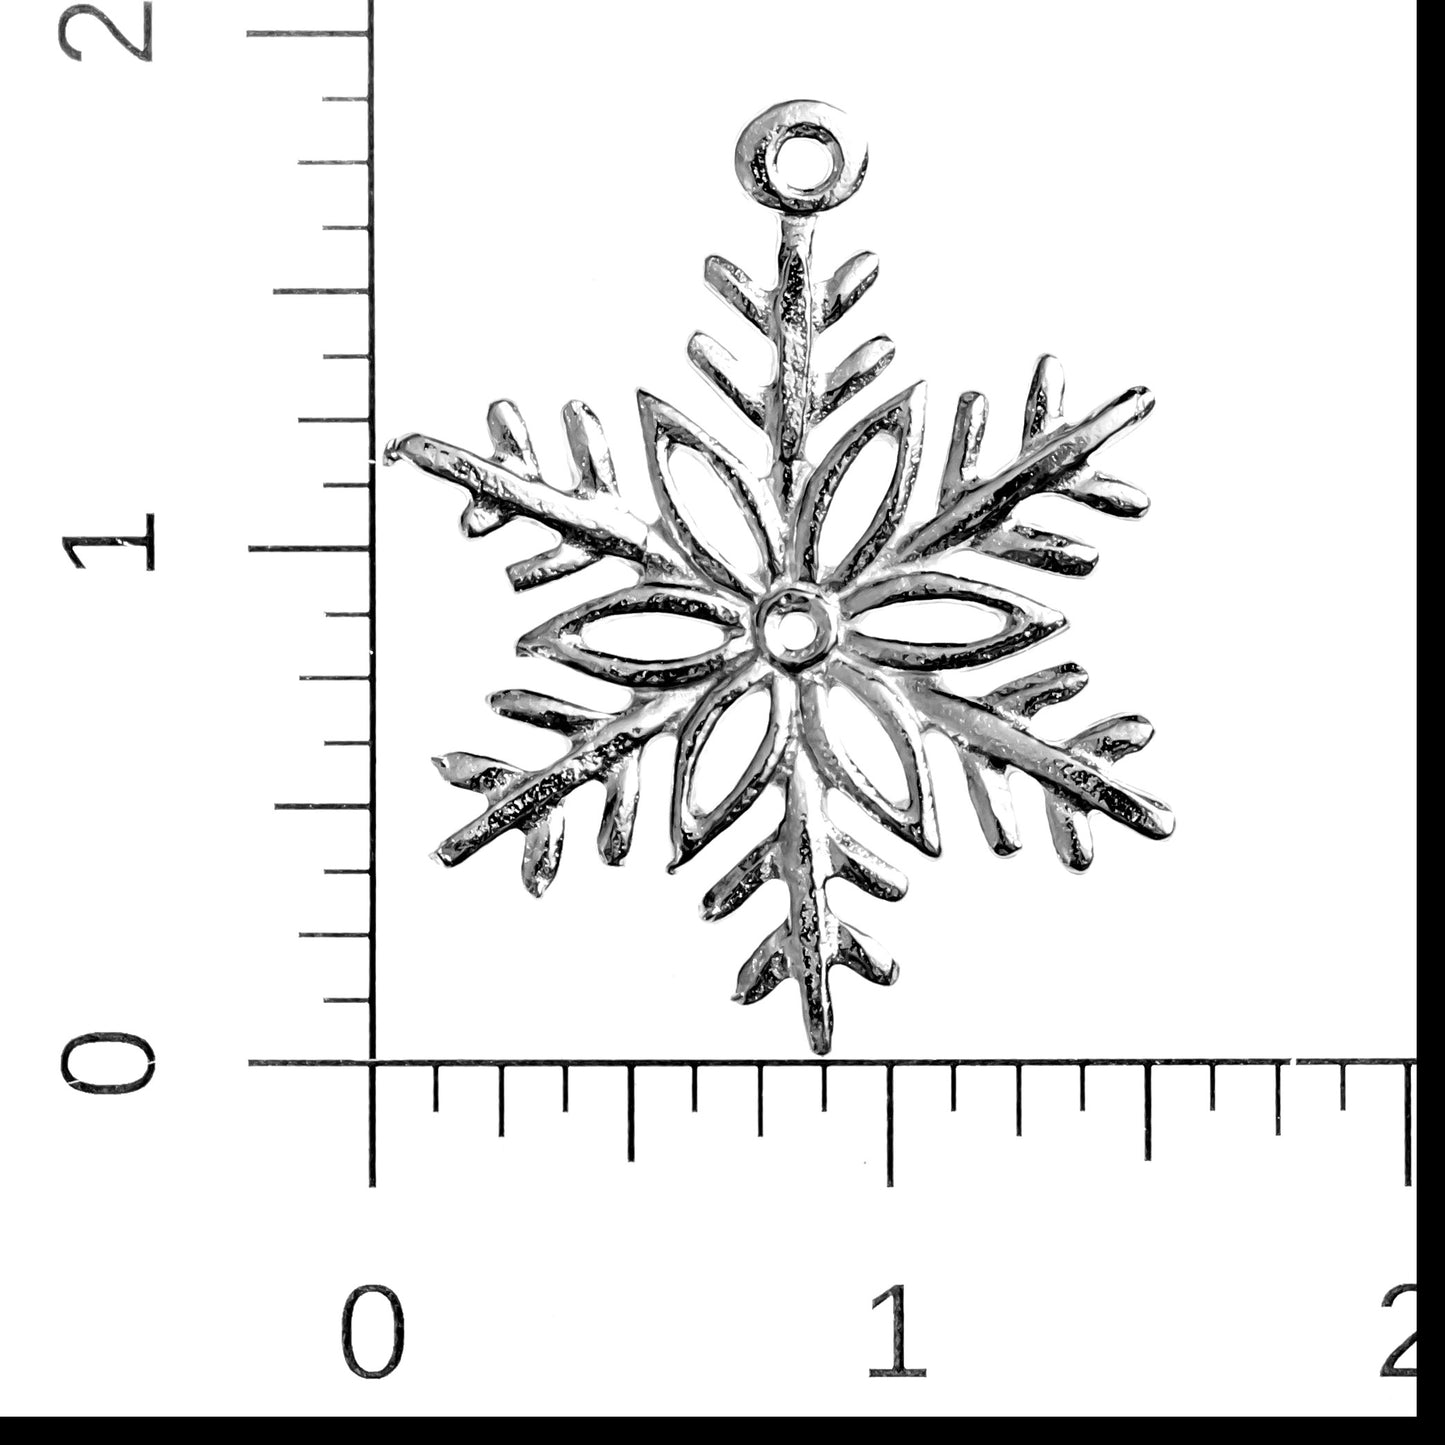 Snowflake Gifts - Snowflake Jewelry - Snowflake Pendant - Snowflake Necklaces - Several Designs